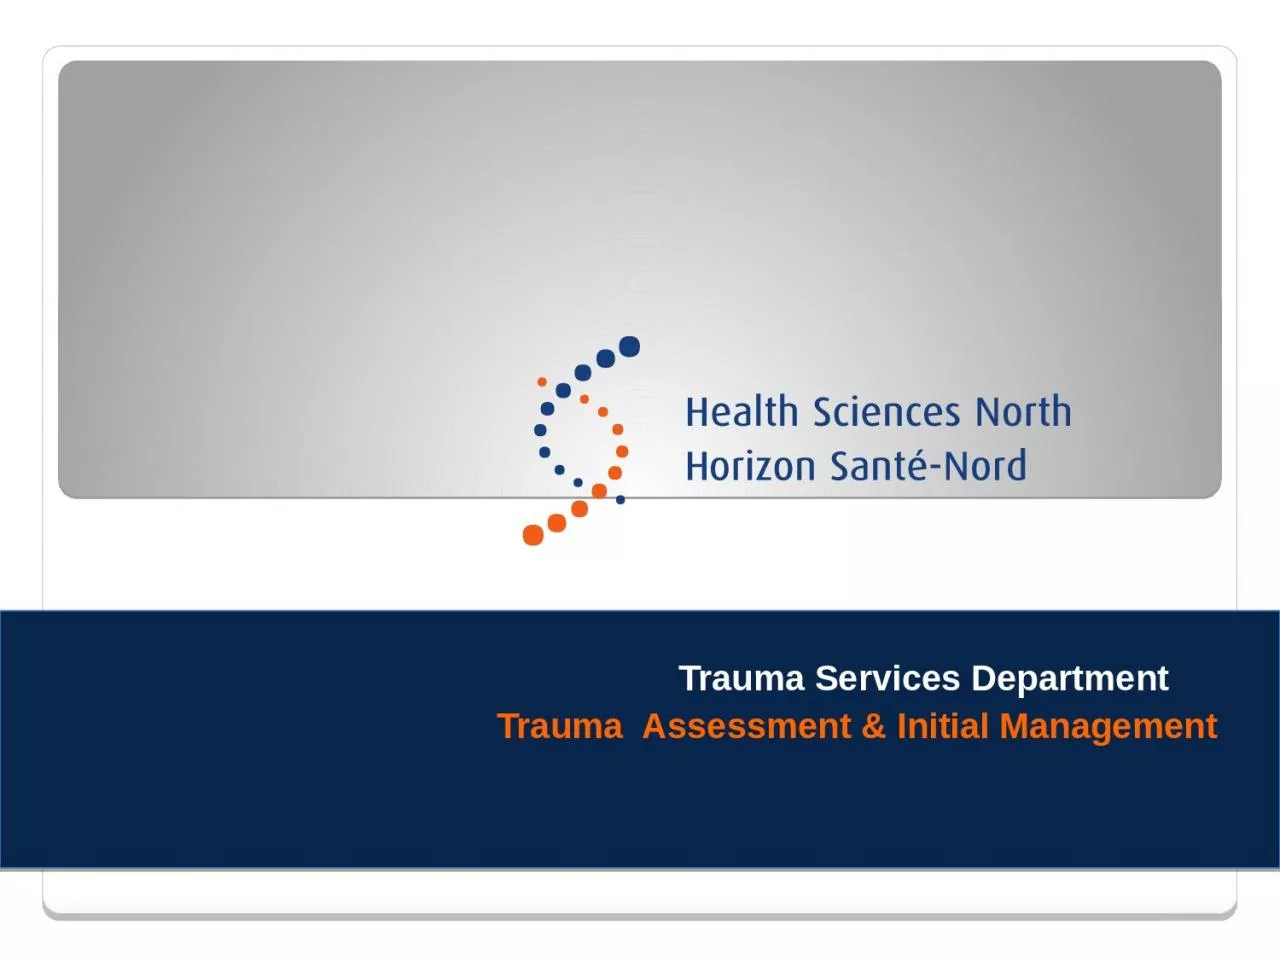 Trauma Services Department